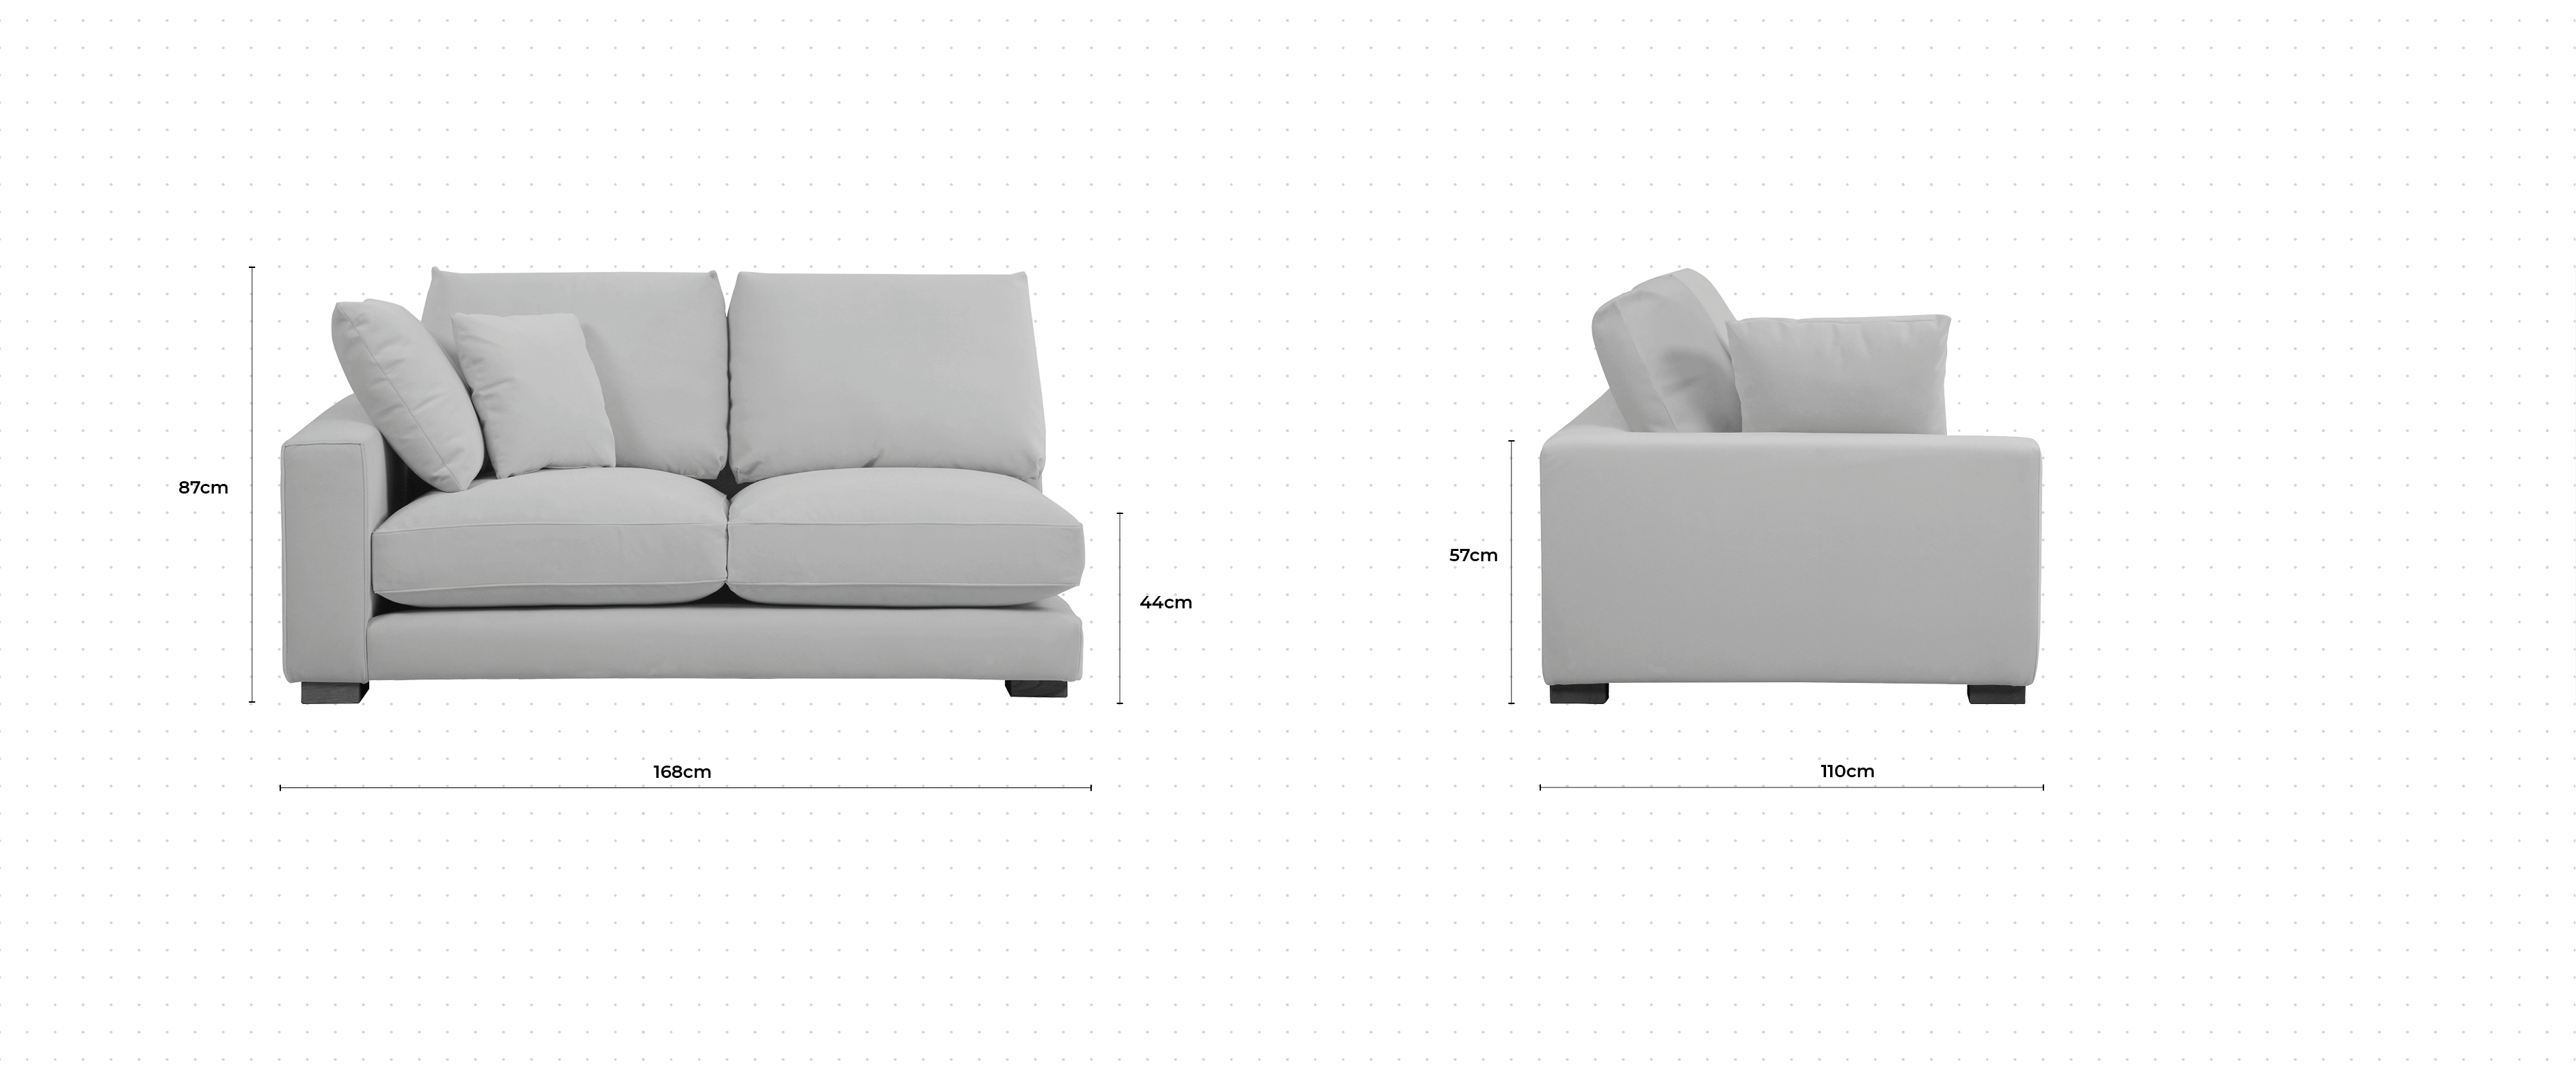 Dillon 2 Seater Sofa LHF dimensions